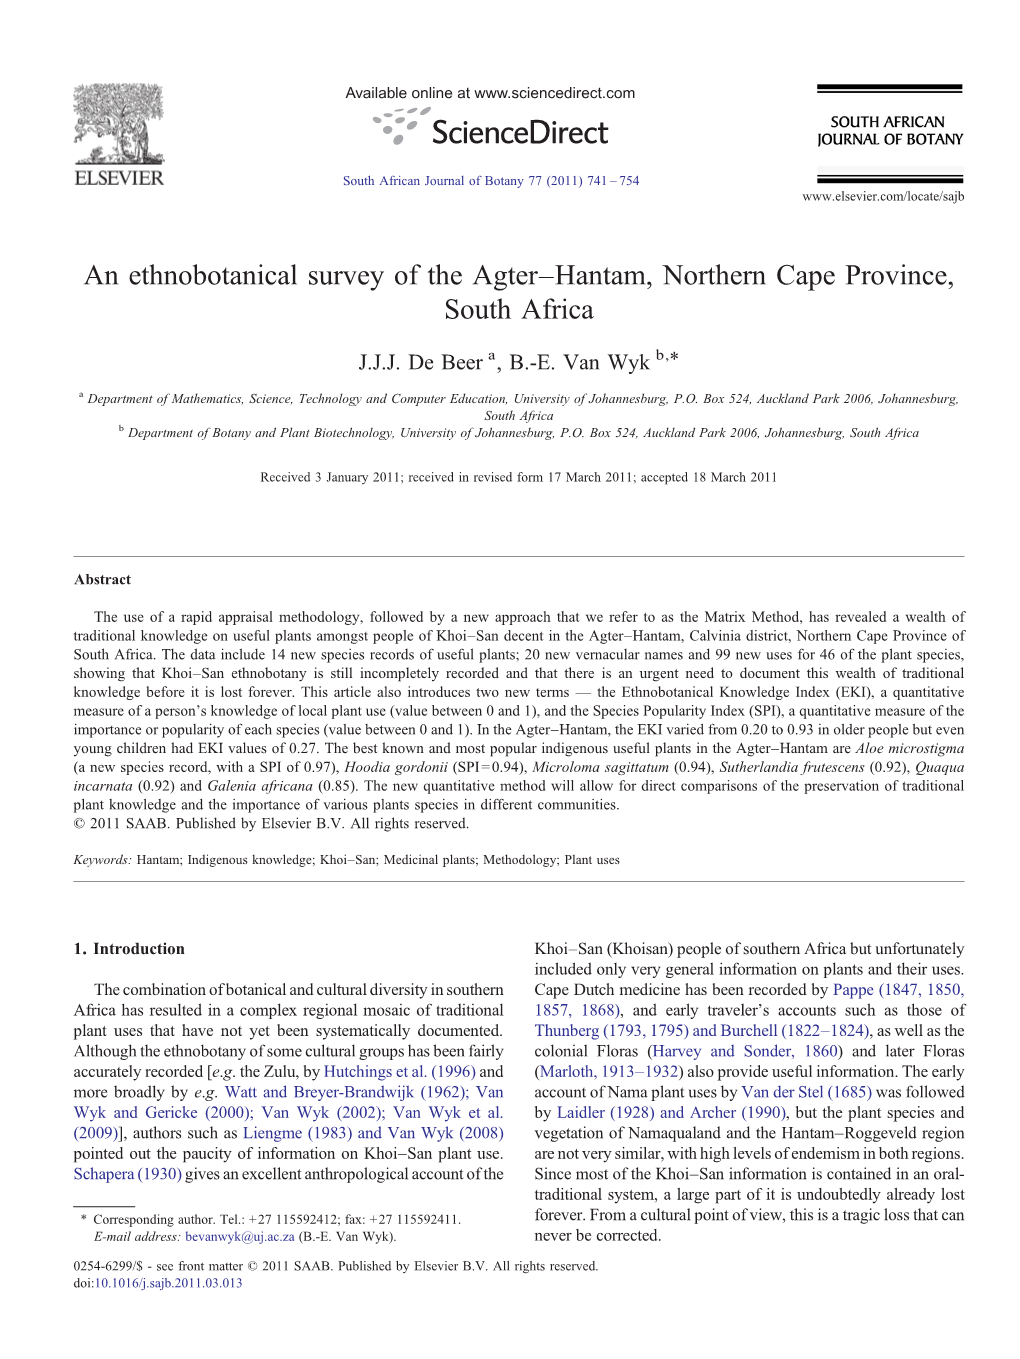 An Ethnobotanical Survey of the Agter–Hantam, Northern Cape Province, South Africa ⁎ J.J.J